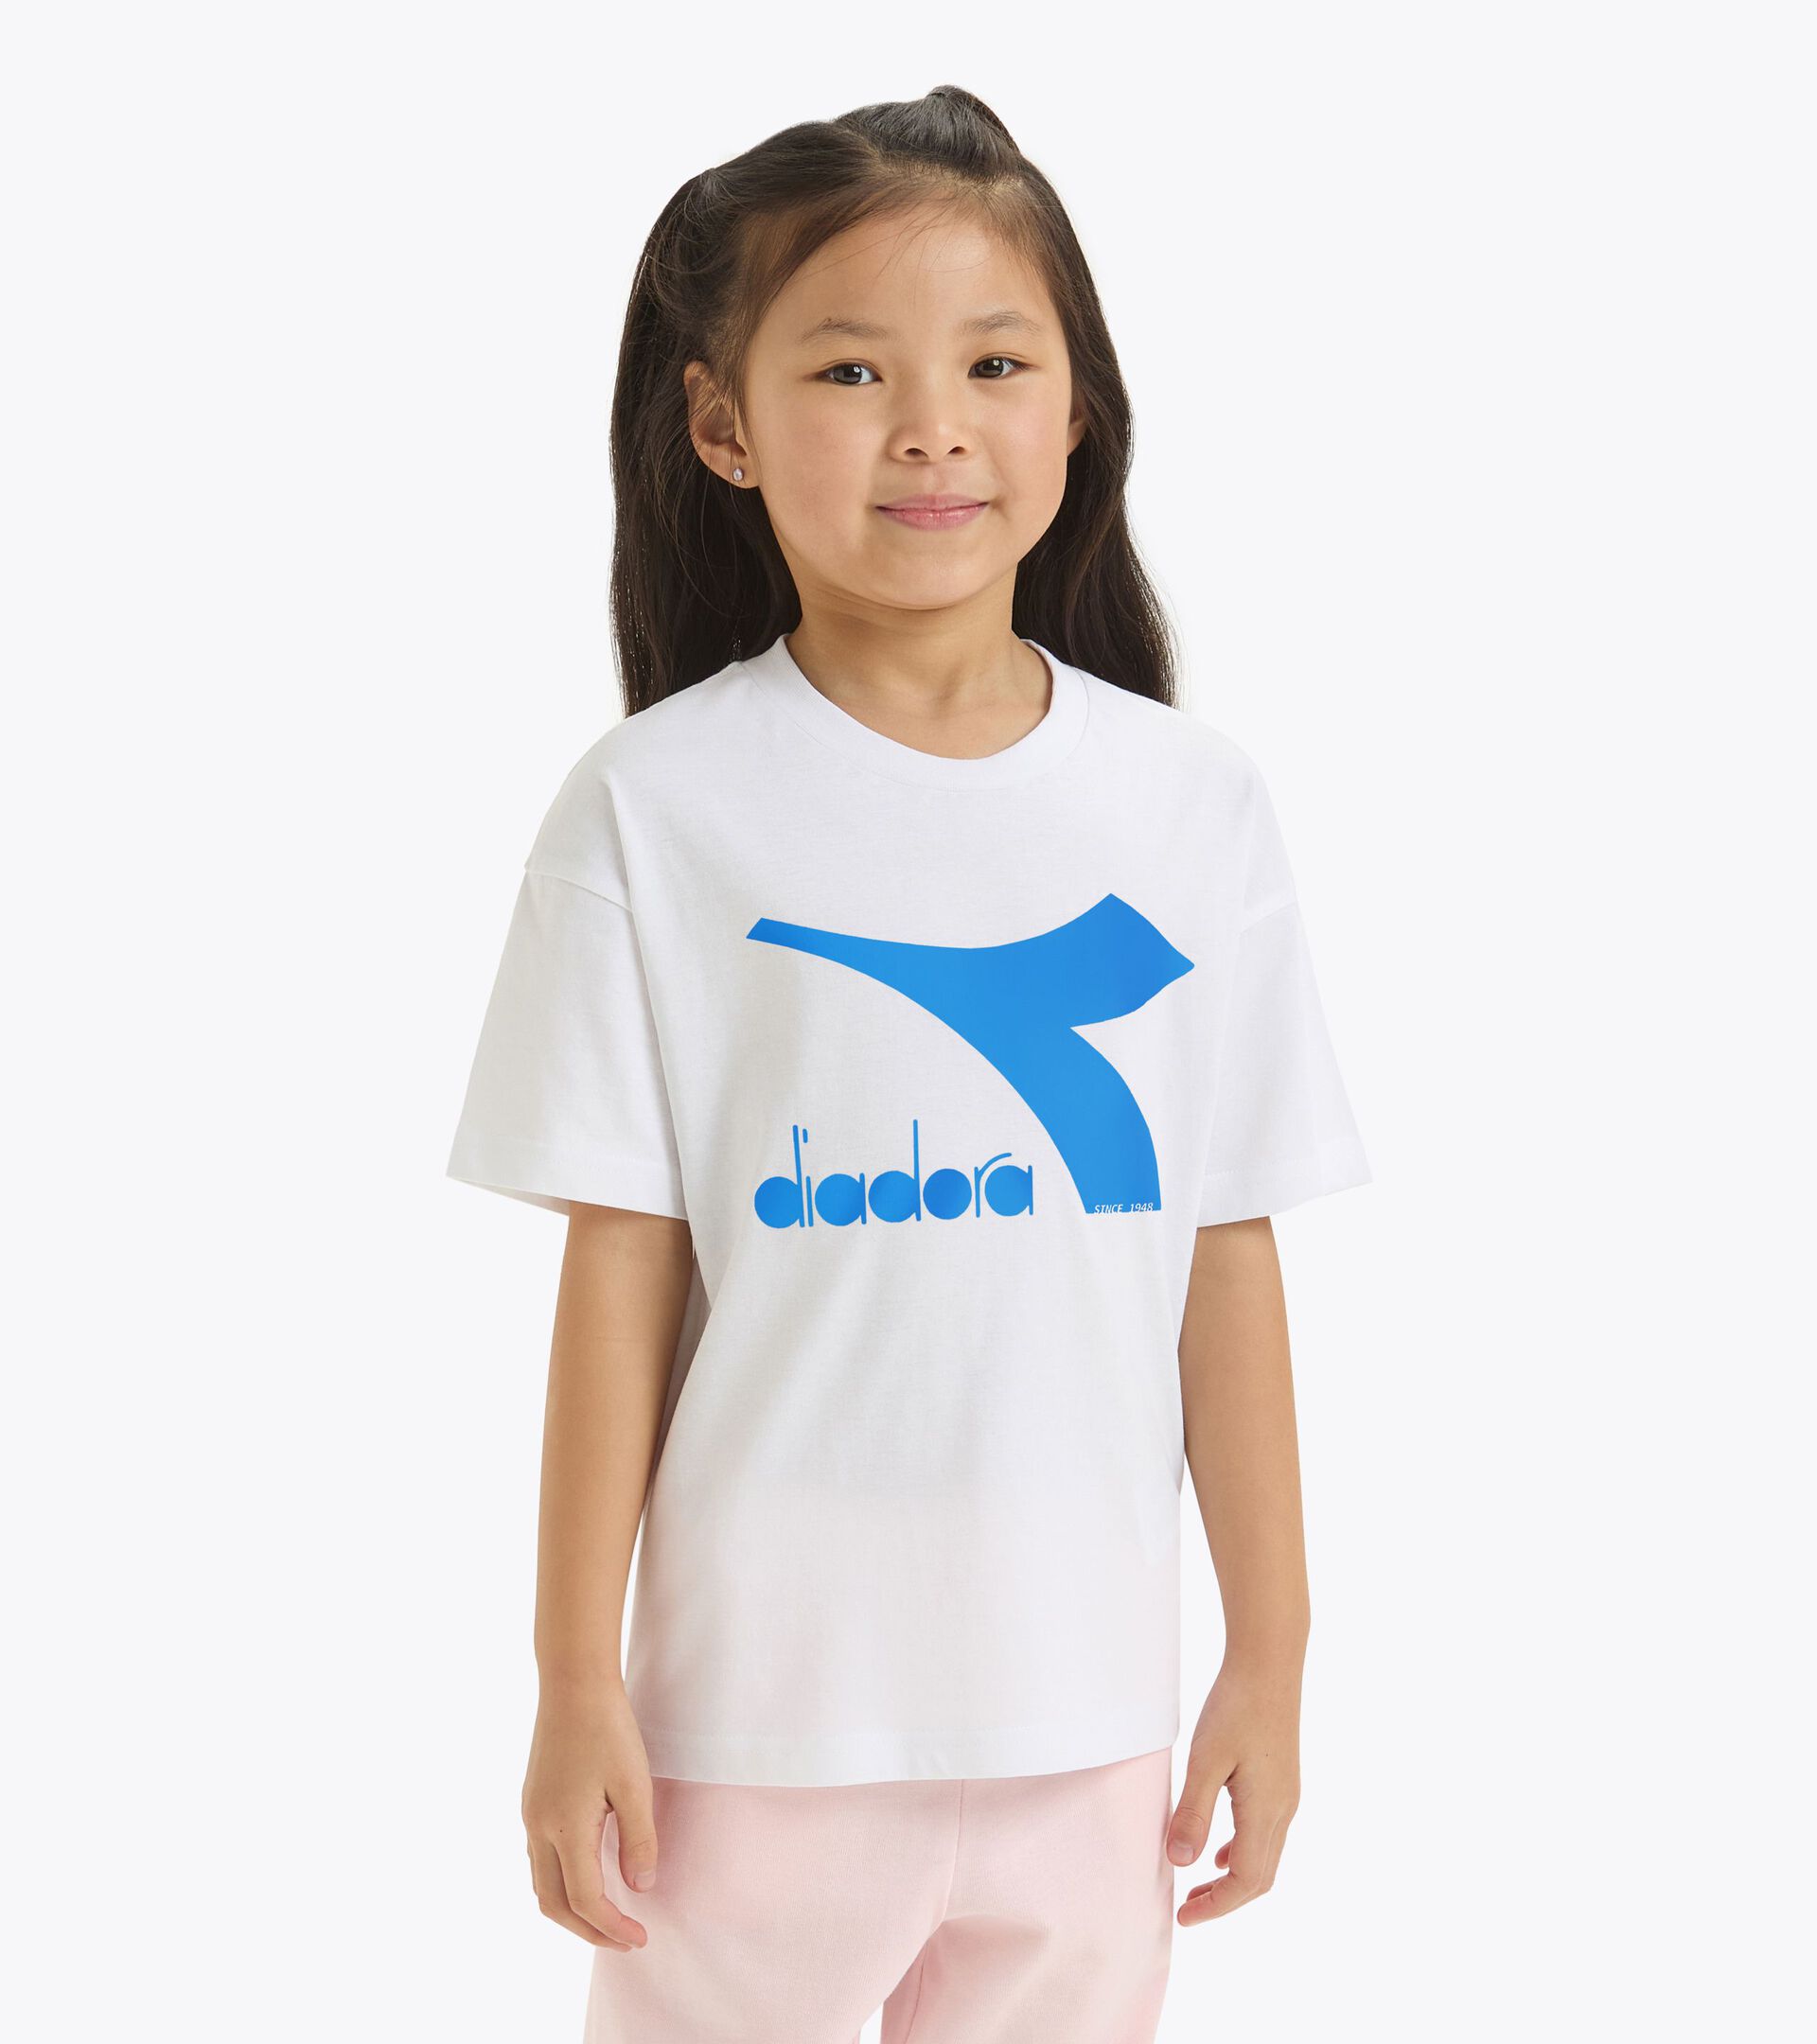 Camiseta deportiva - Niños y Niñas
 JU.T-SHIRT SS BL BIANCO OTTICO/BLU PRINCIPESSA - Diadora